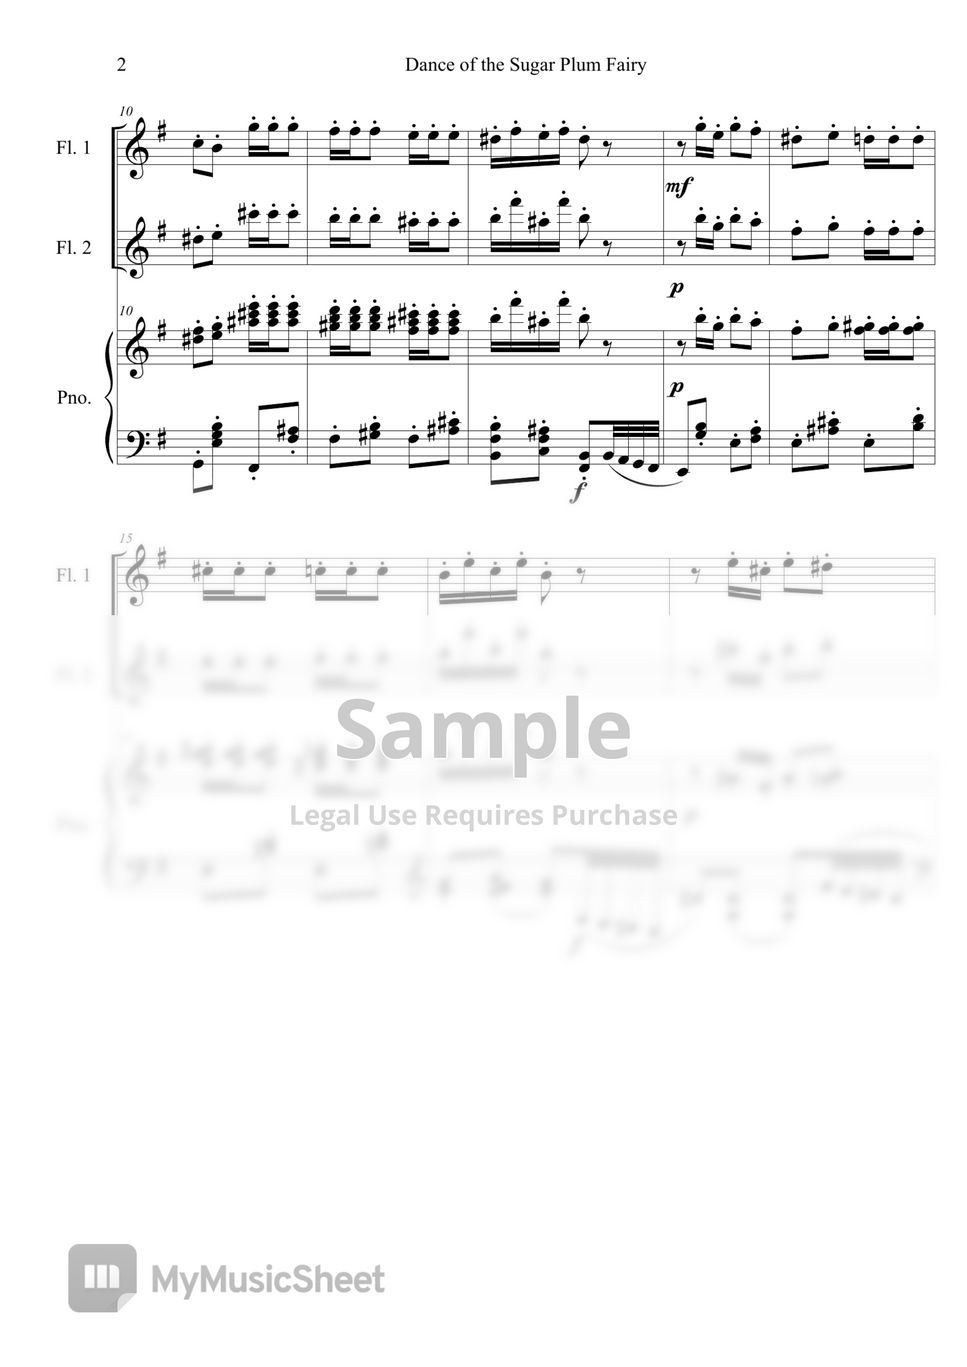 Tchaikovsky - flute duet_Dance of Sugar Plum Fairy(호두까지 인형 사탕요정의 춤) (2Flutes, Piano) by YoungJoo Lee